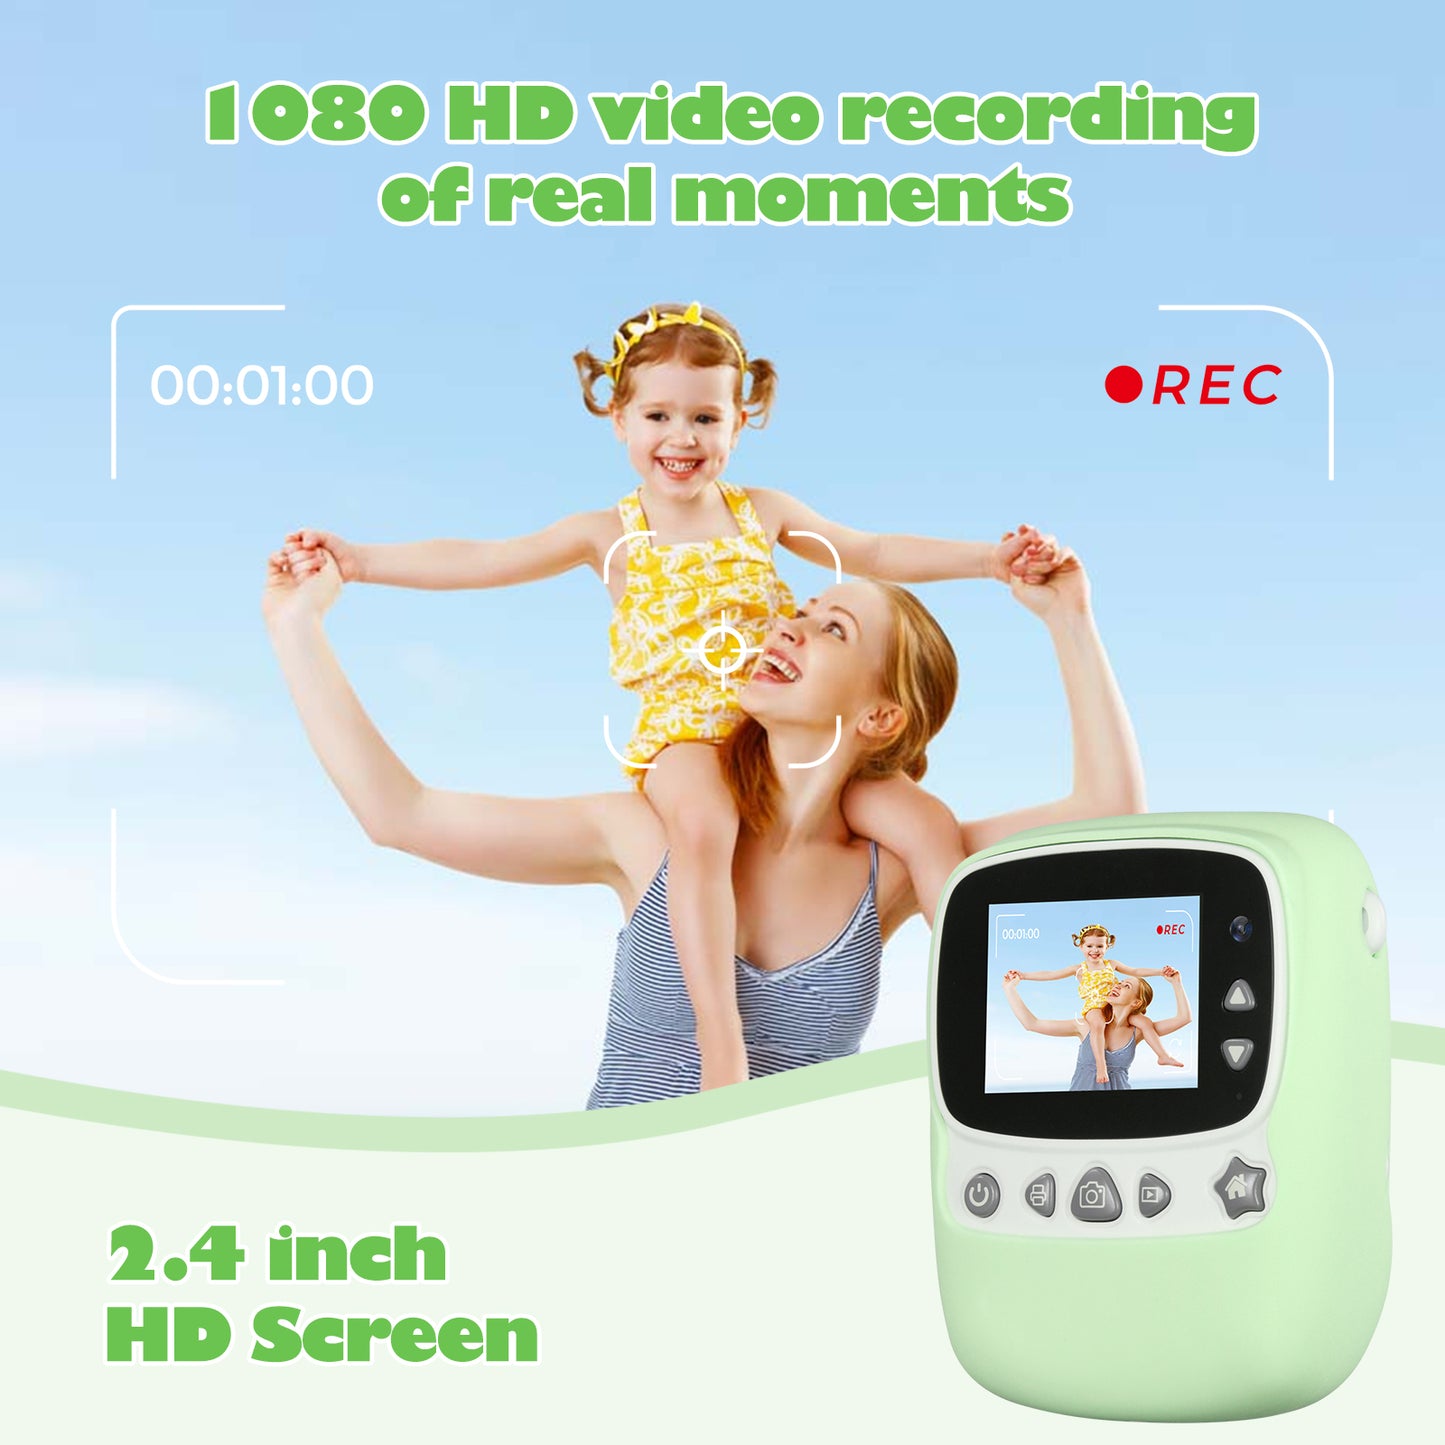 finelifepro 30MP Kinder Sofortbildkamera, 1080p Digitalkamera, Grün